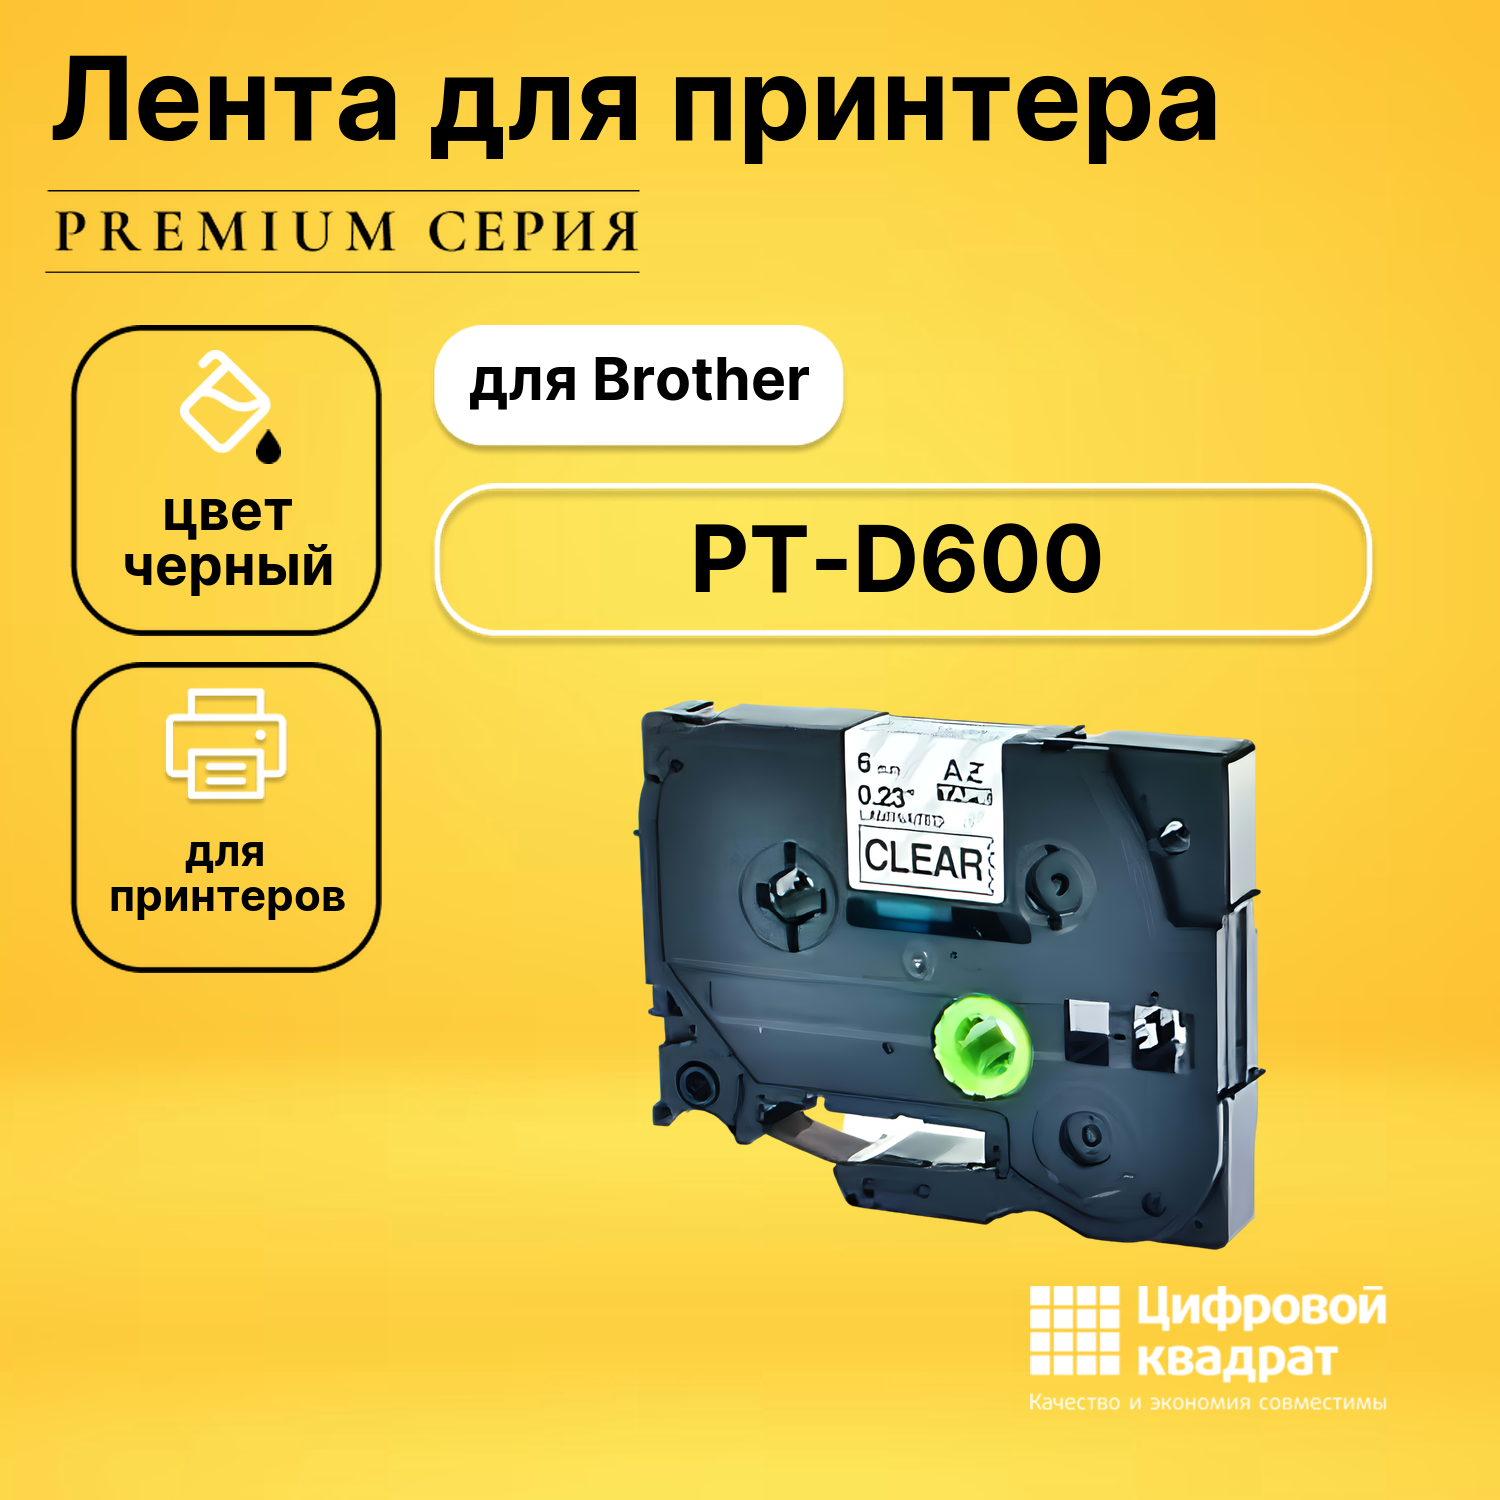 Лента для печати этикеток и наклеек для Brother PT-D600